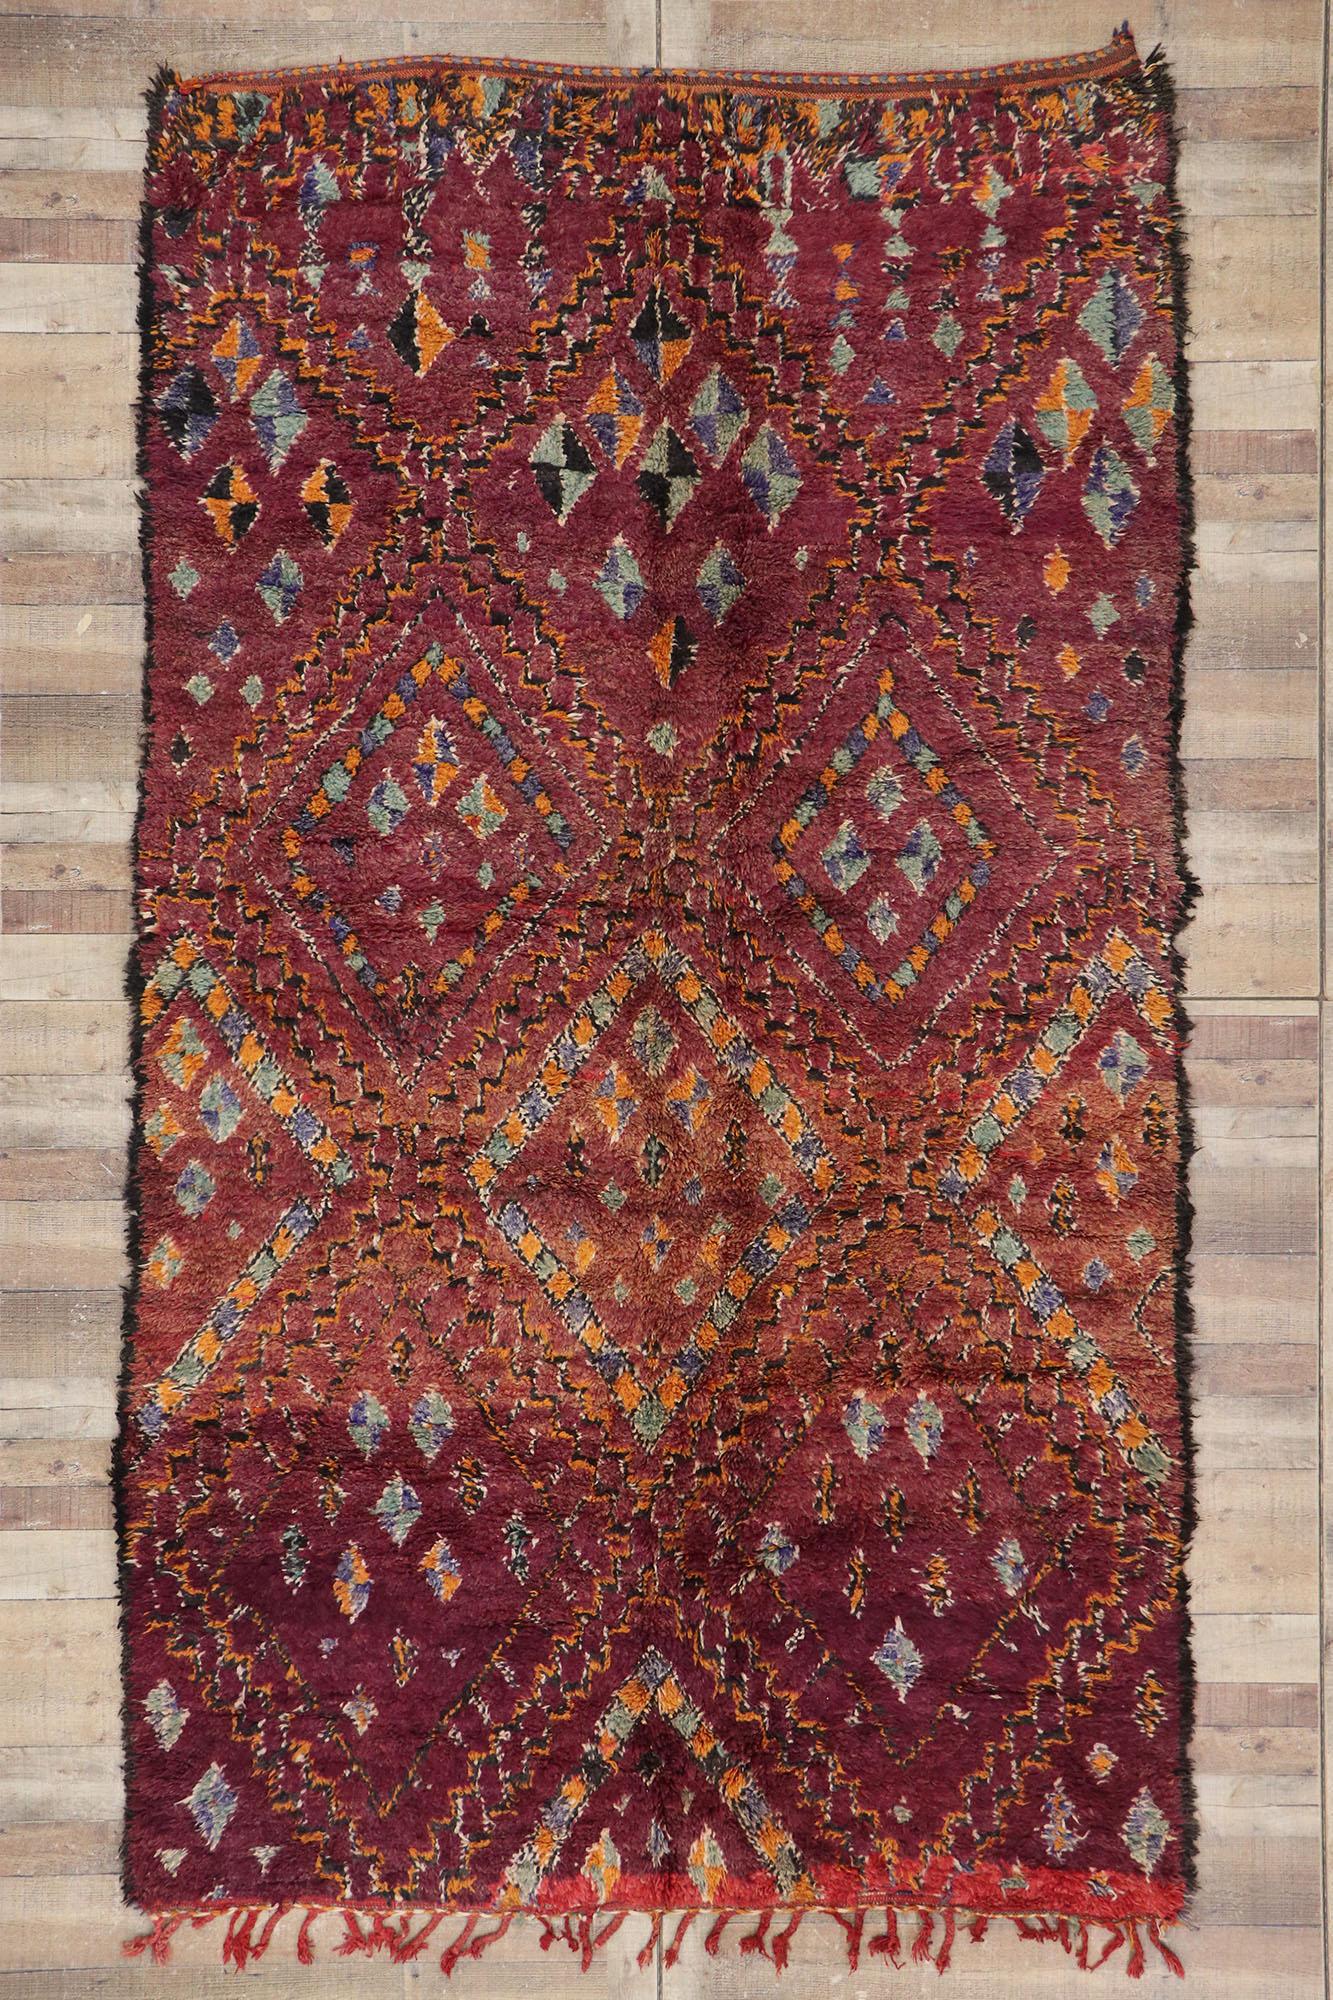 Wool Vintage Beni MGuild Moroccan Rug, Nomadic Charm Meets Jungalow Boho For Sale